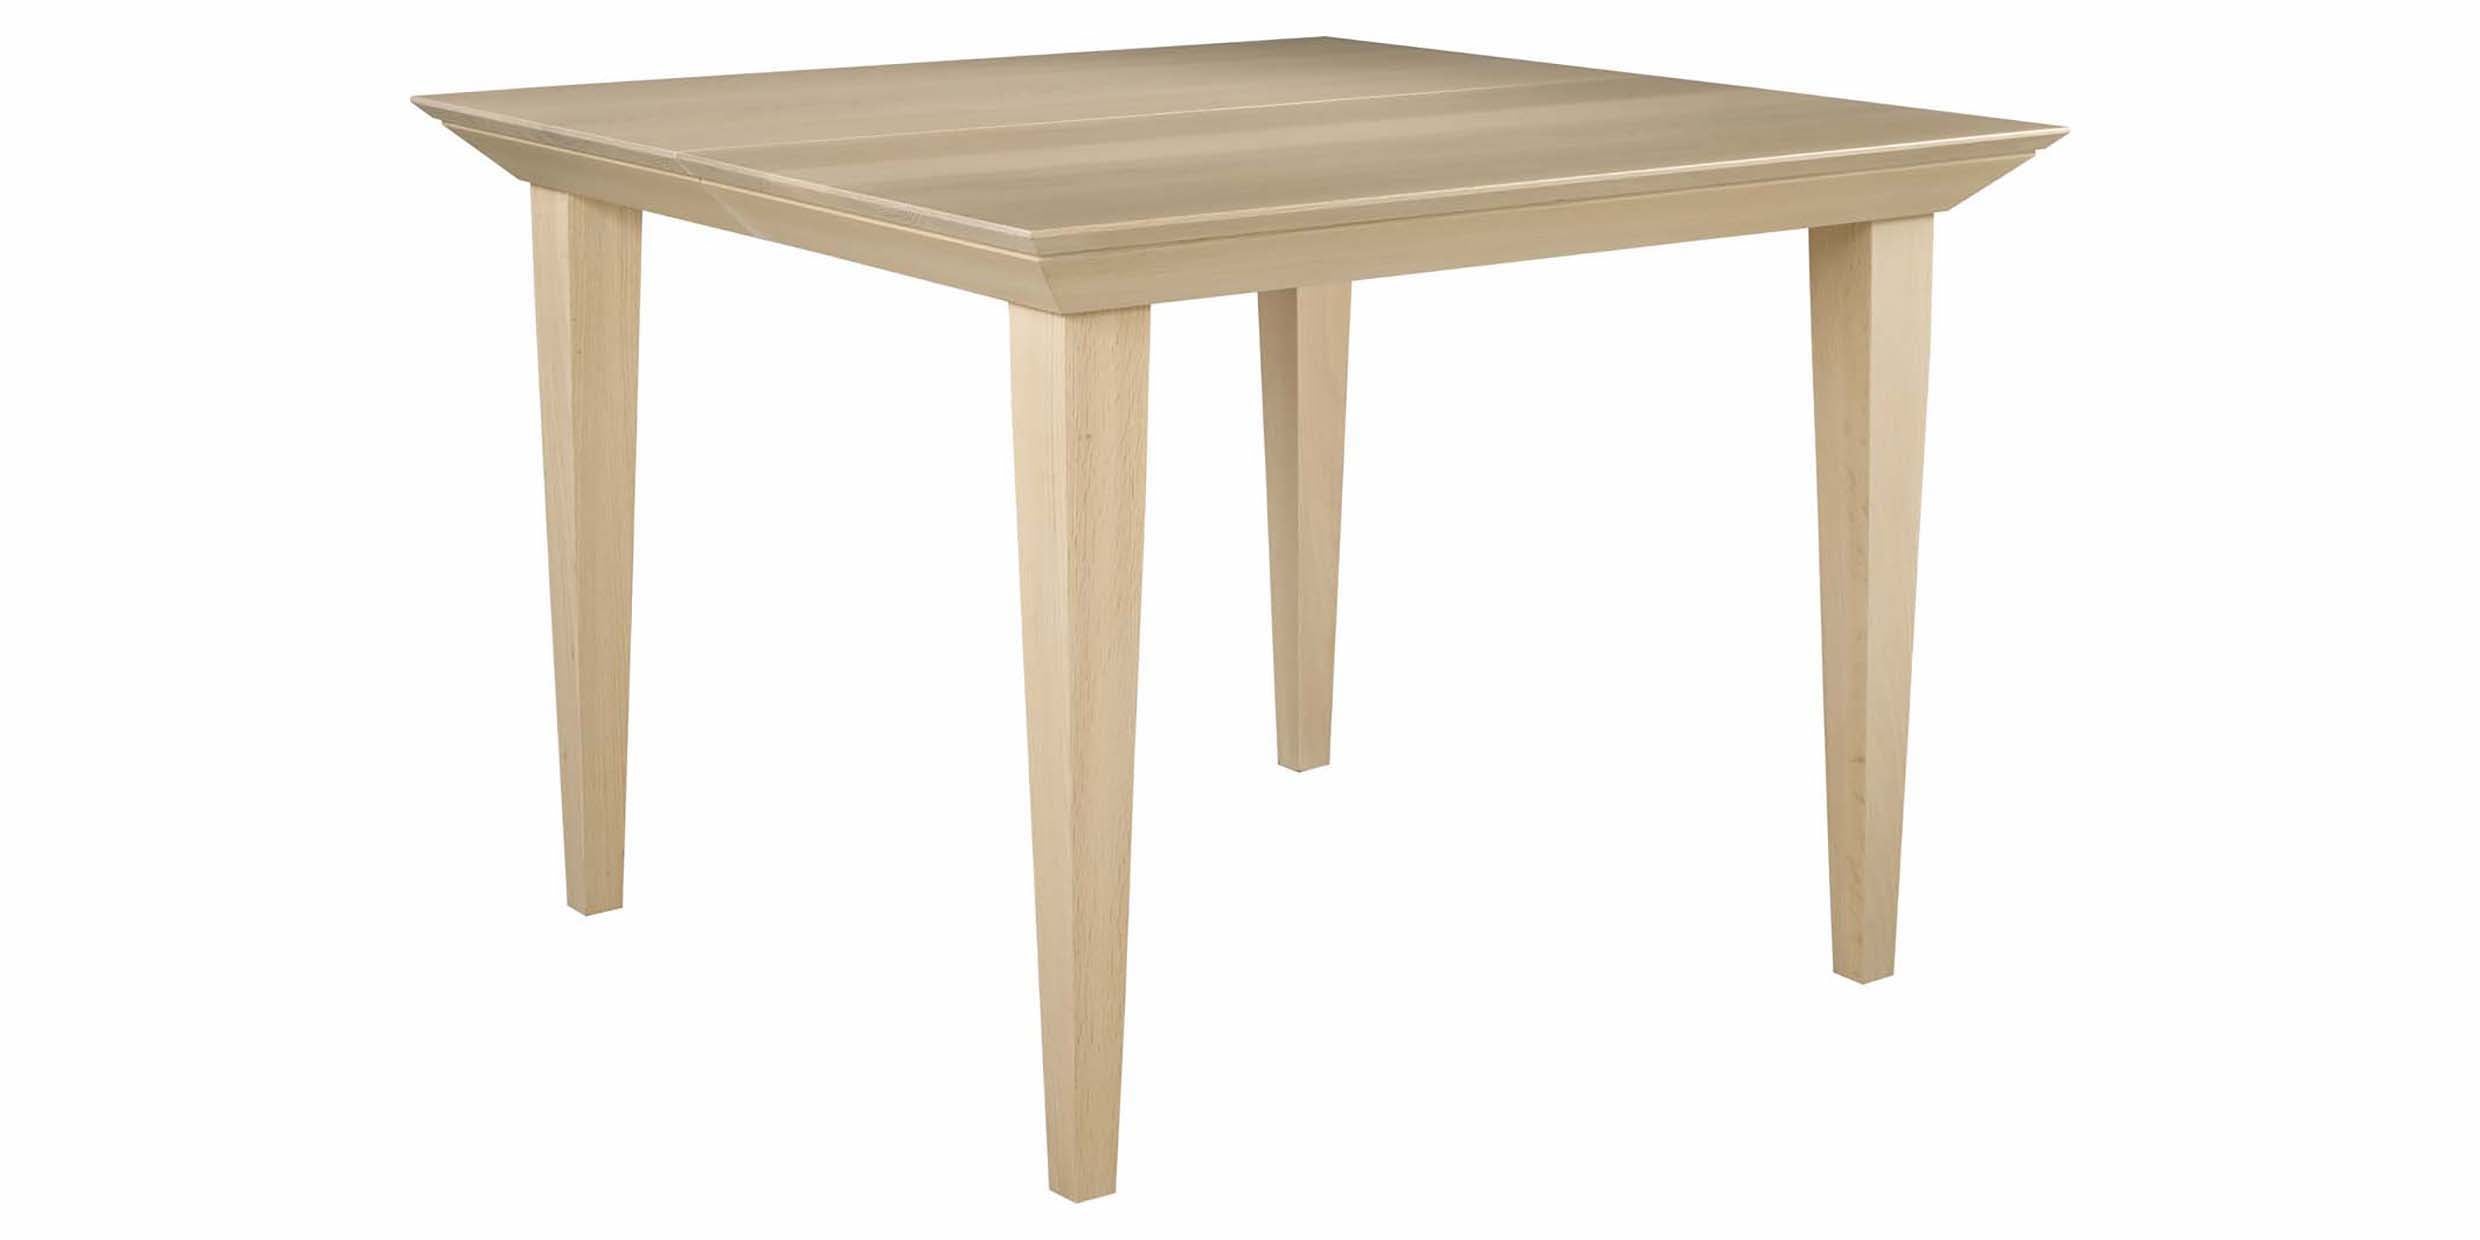 Table as Shown | Cardinal Woodcraft Bauhaus Dining Table | Valley Ridge Furniture